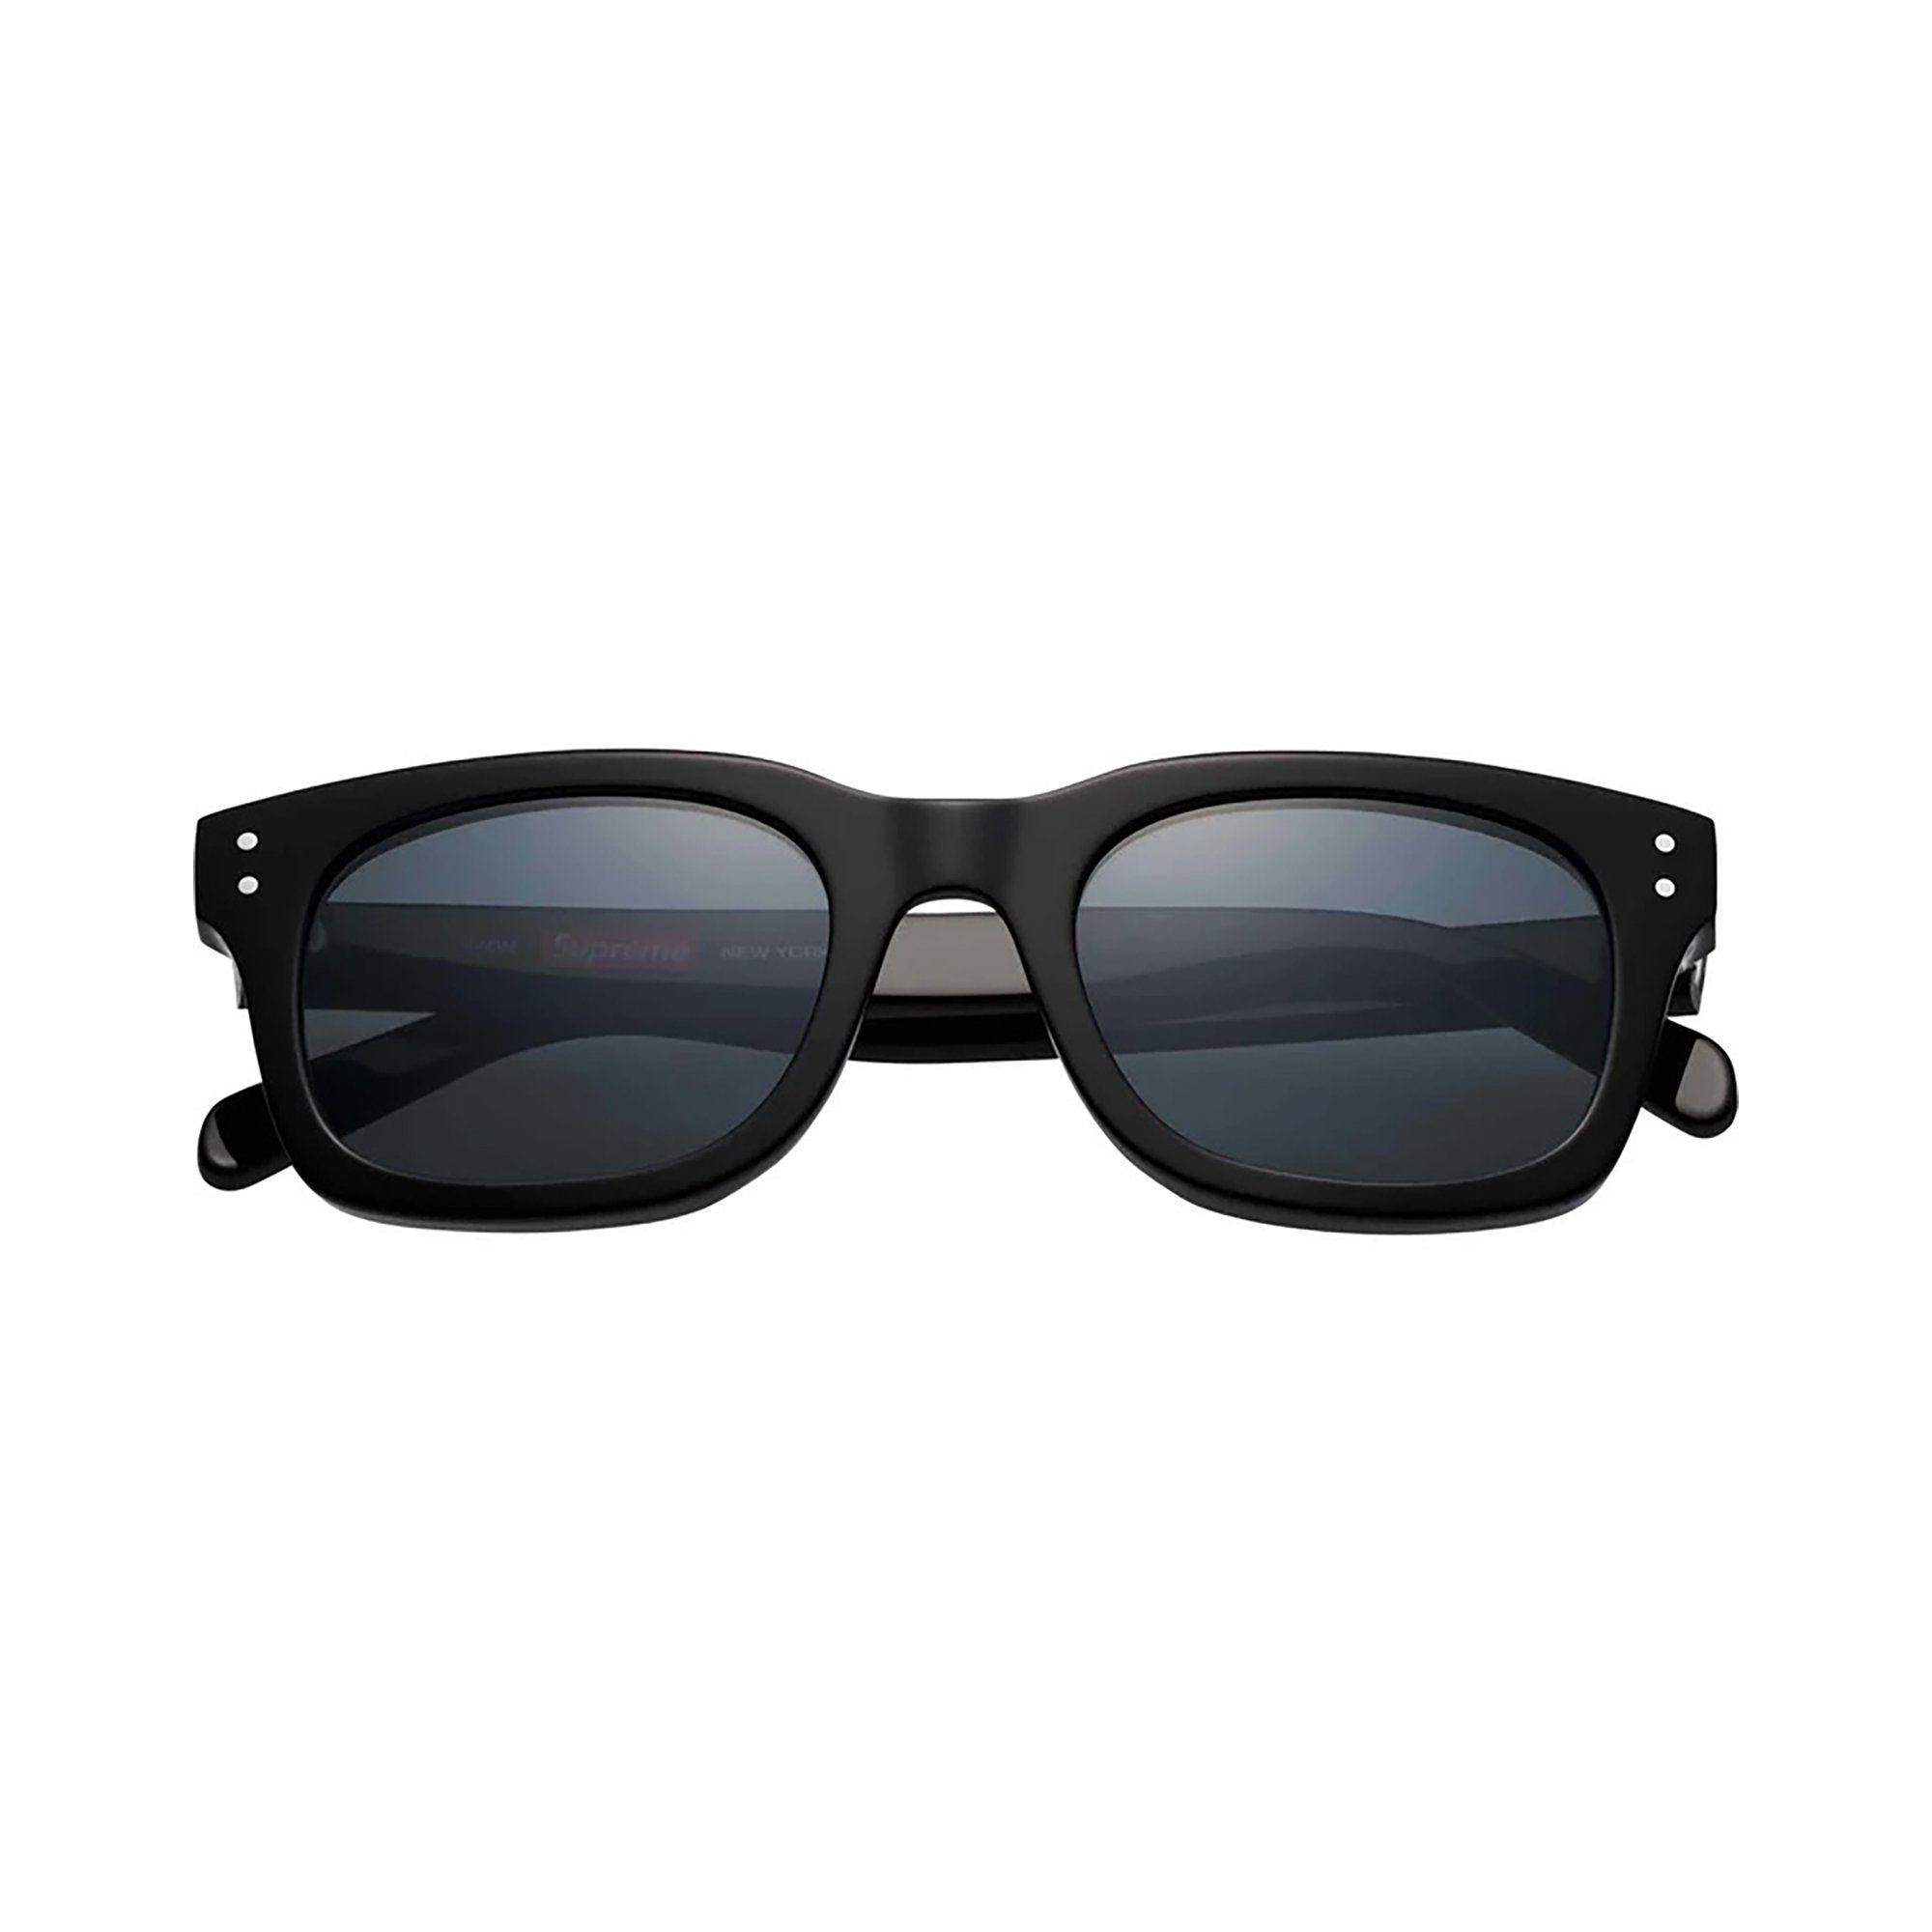 Supreme Avon Sunglasses 'Black'